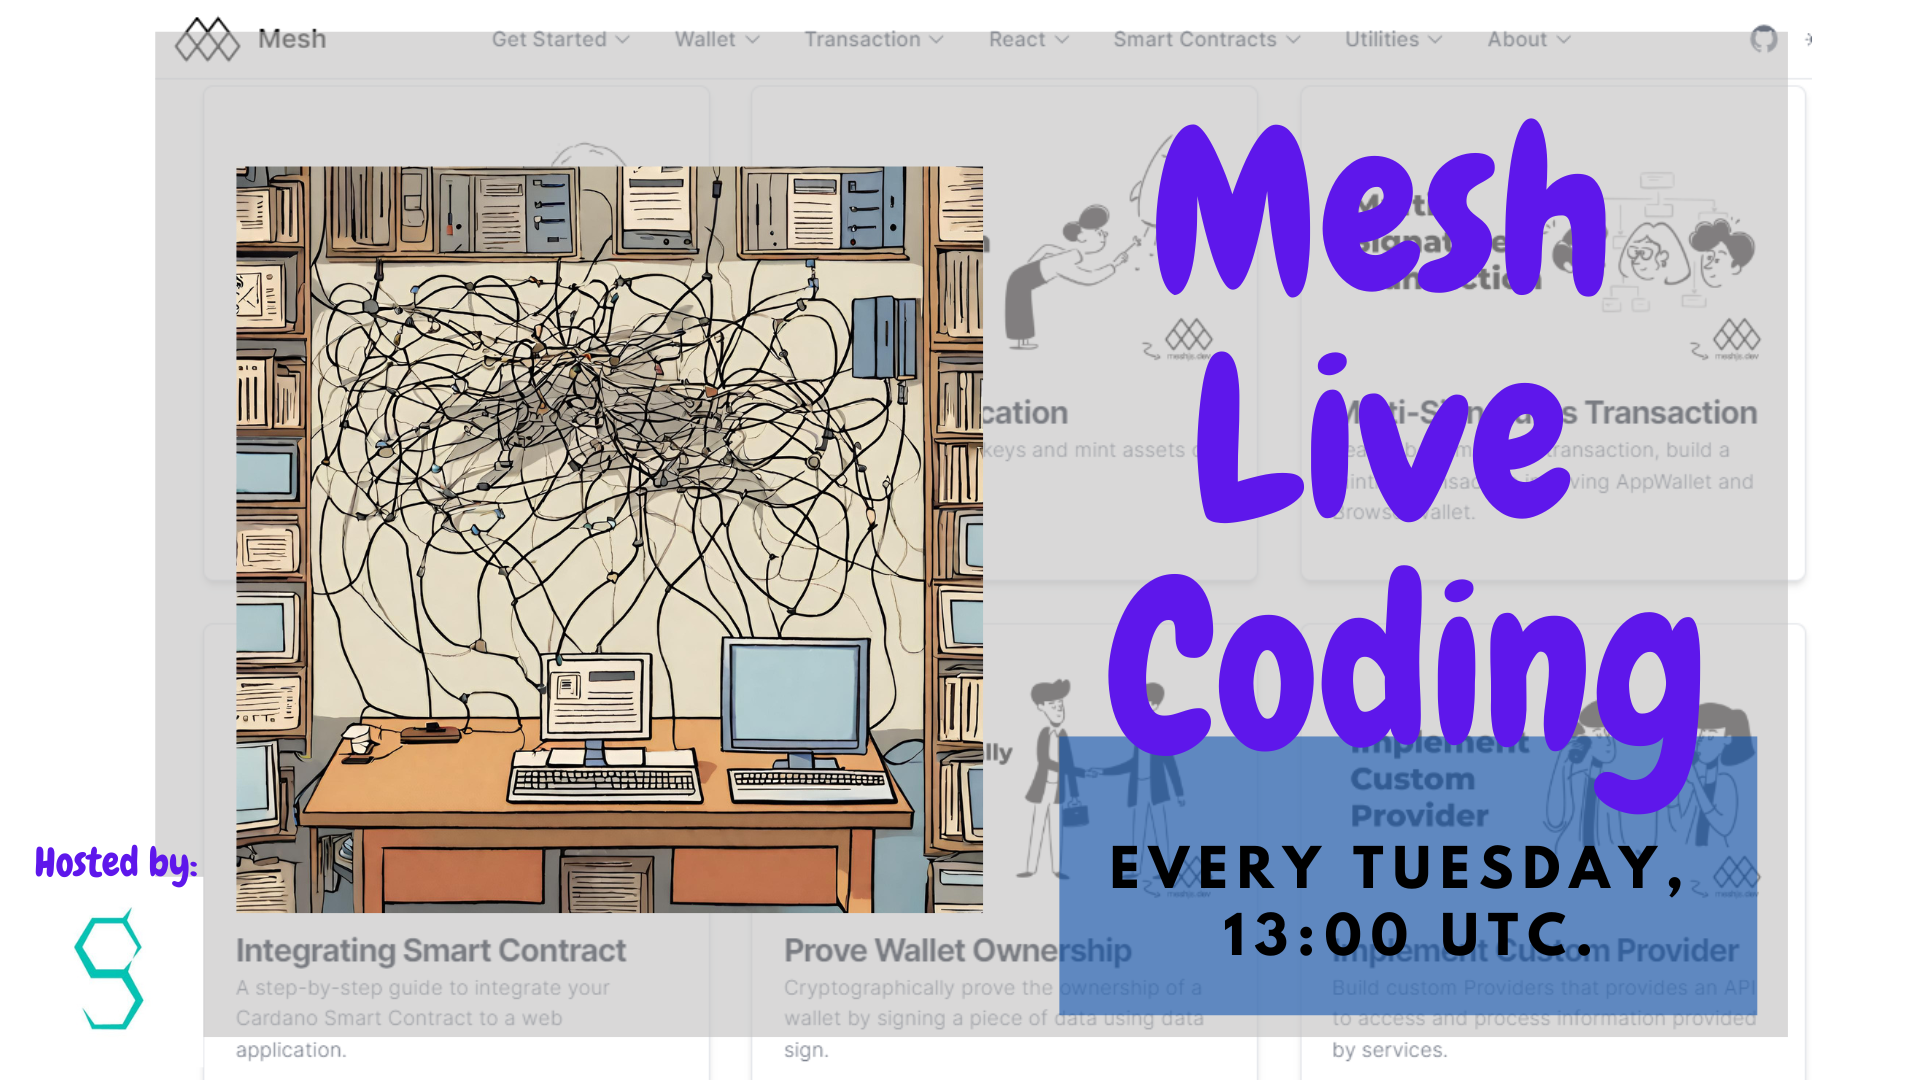 Mesh Live Coding, tommorrow at 13:00 UTC